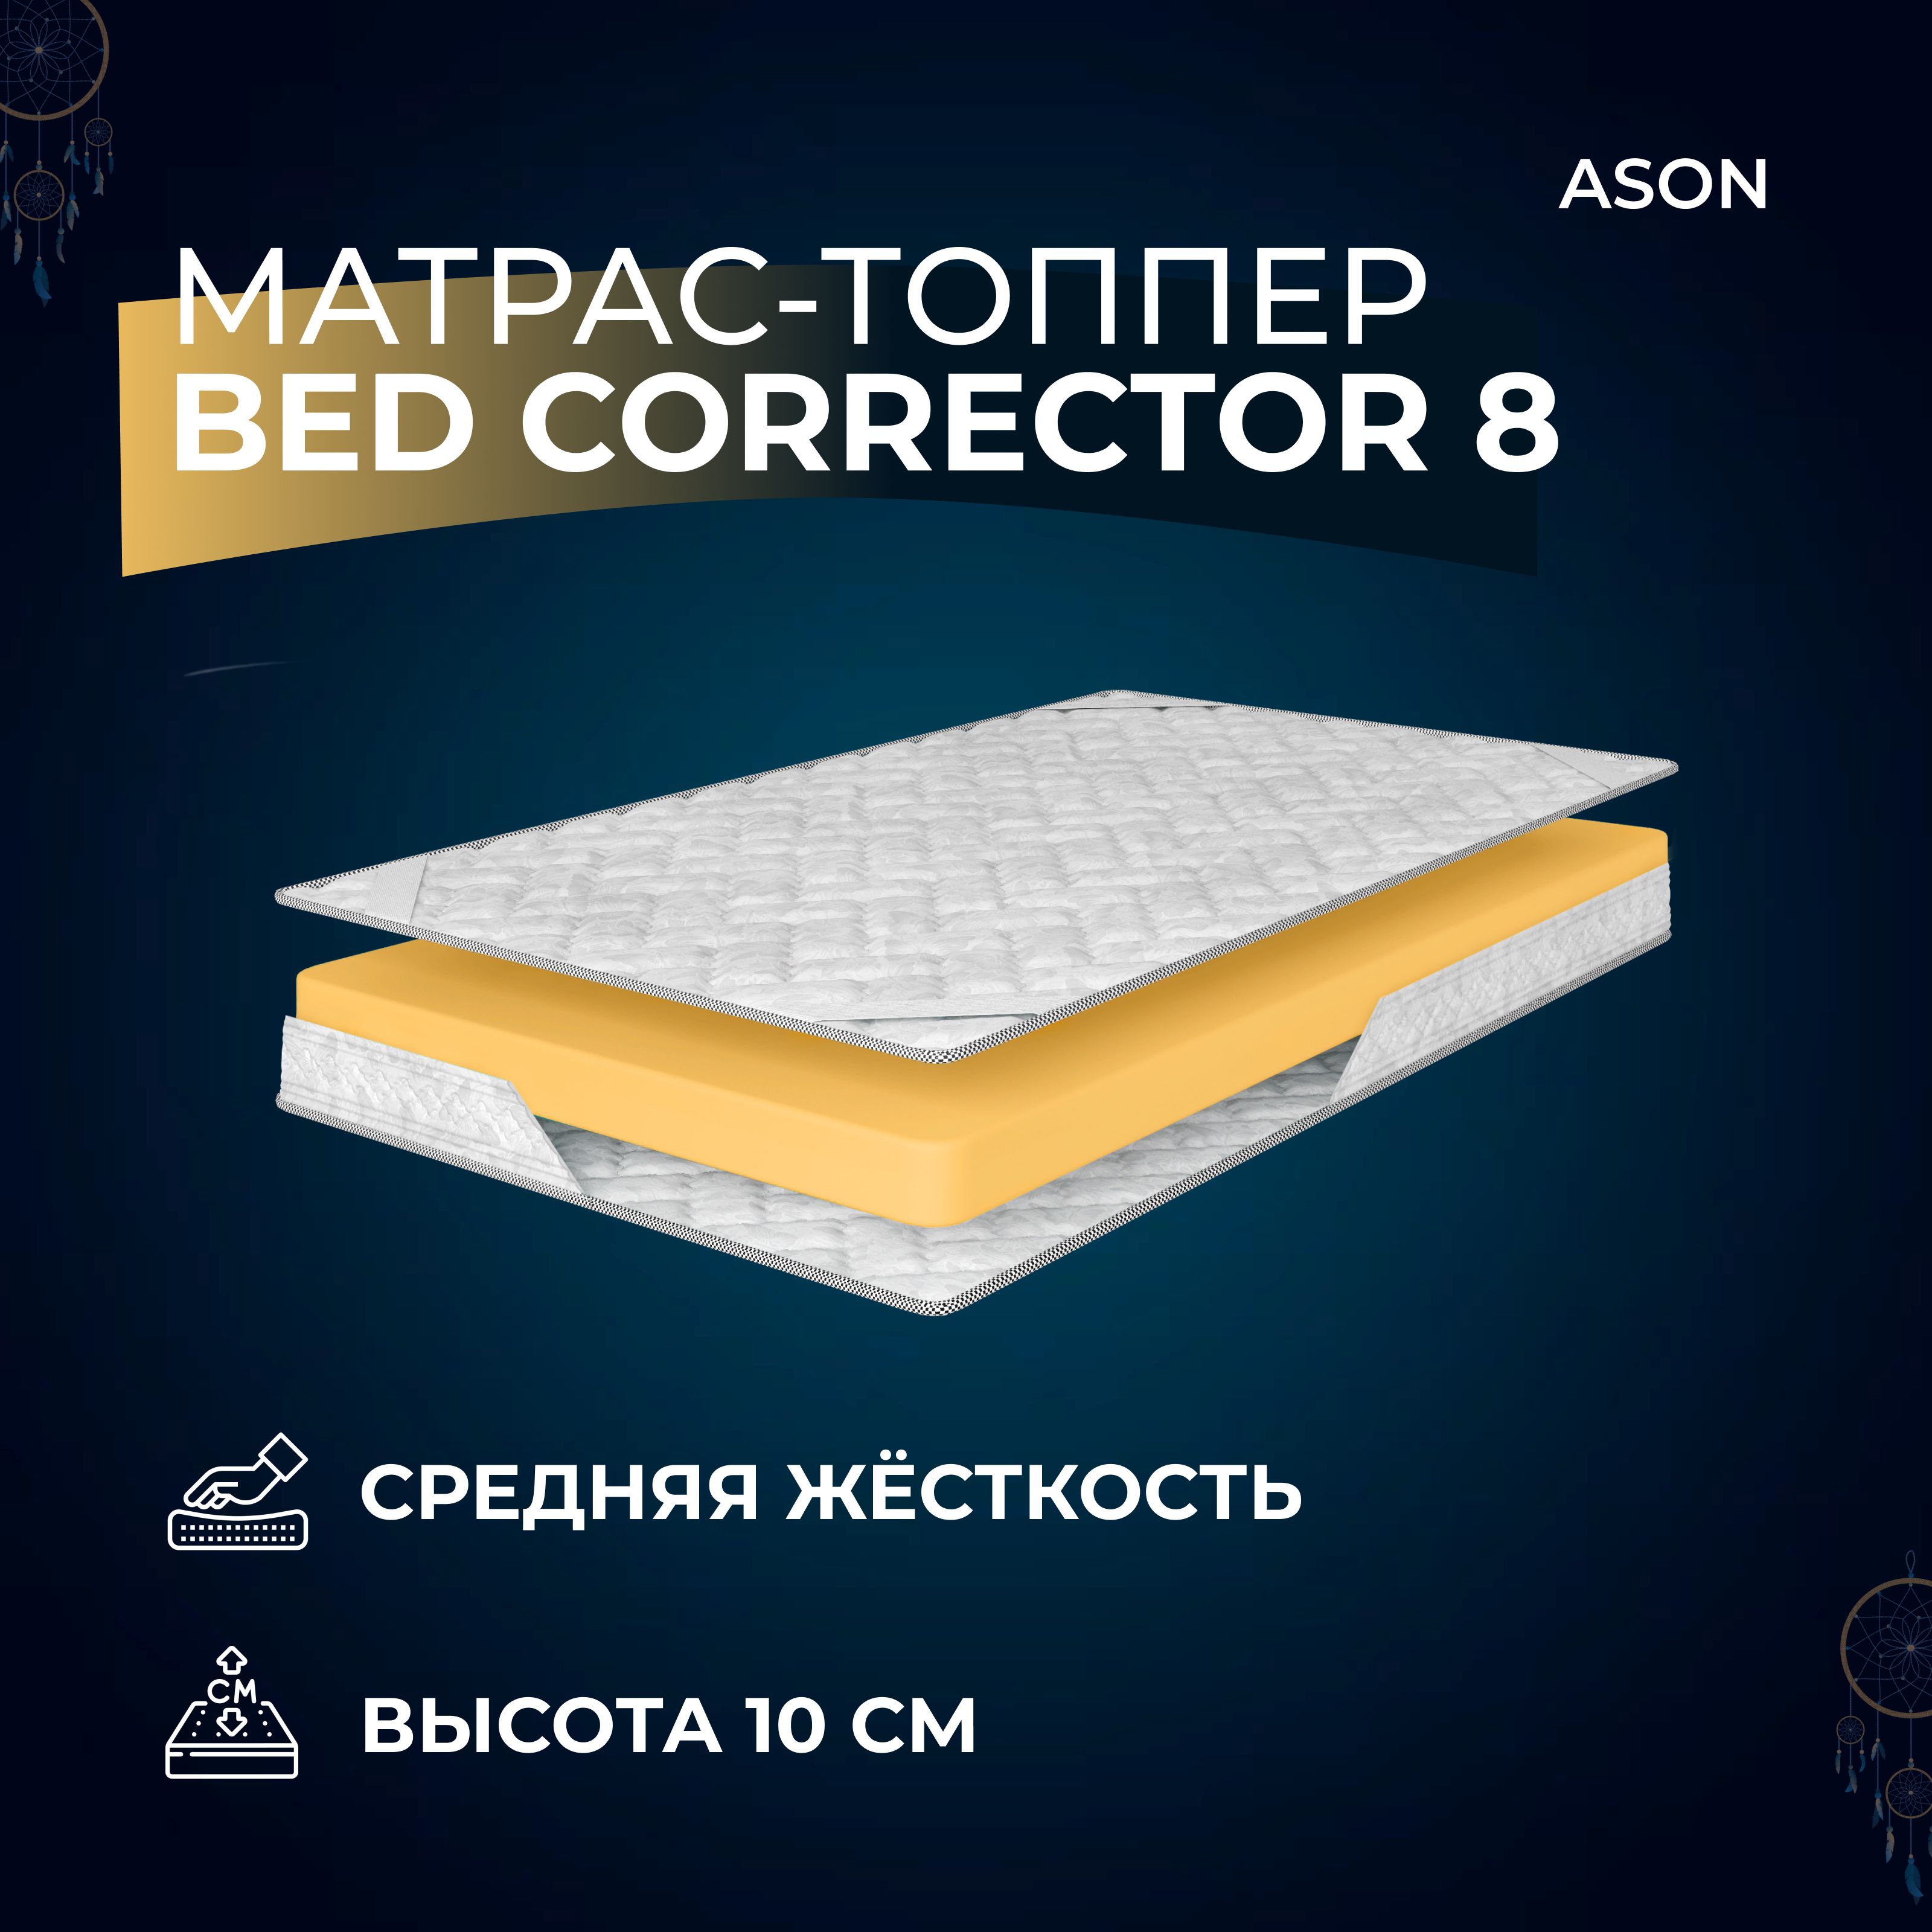 Матрас-топпер 145х180 Ason, Bed corrector 8